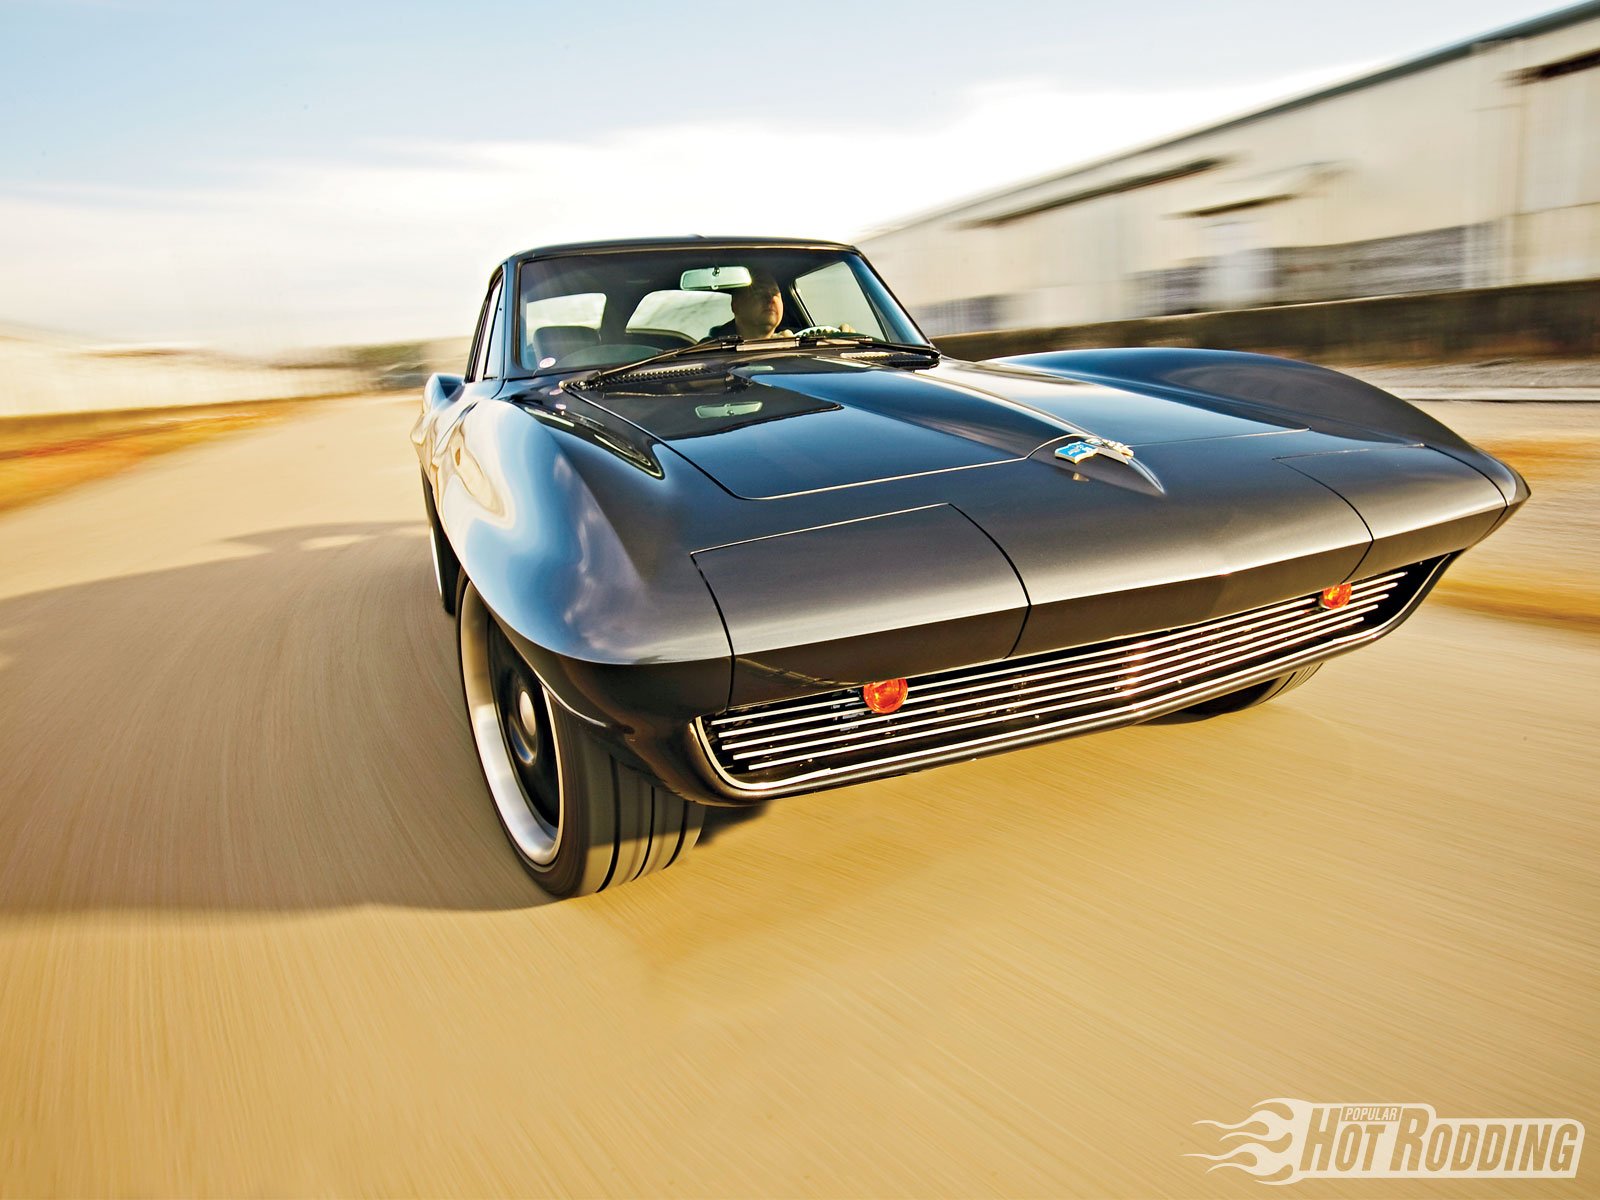 1600x1200 1963 Chevy Corvette Wallpaper Background Image. 